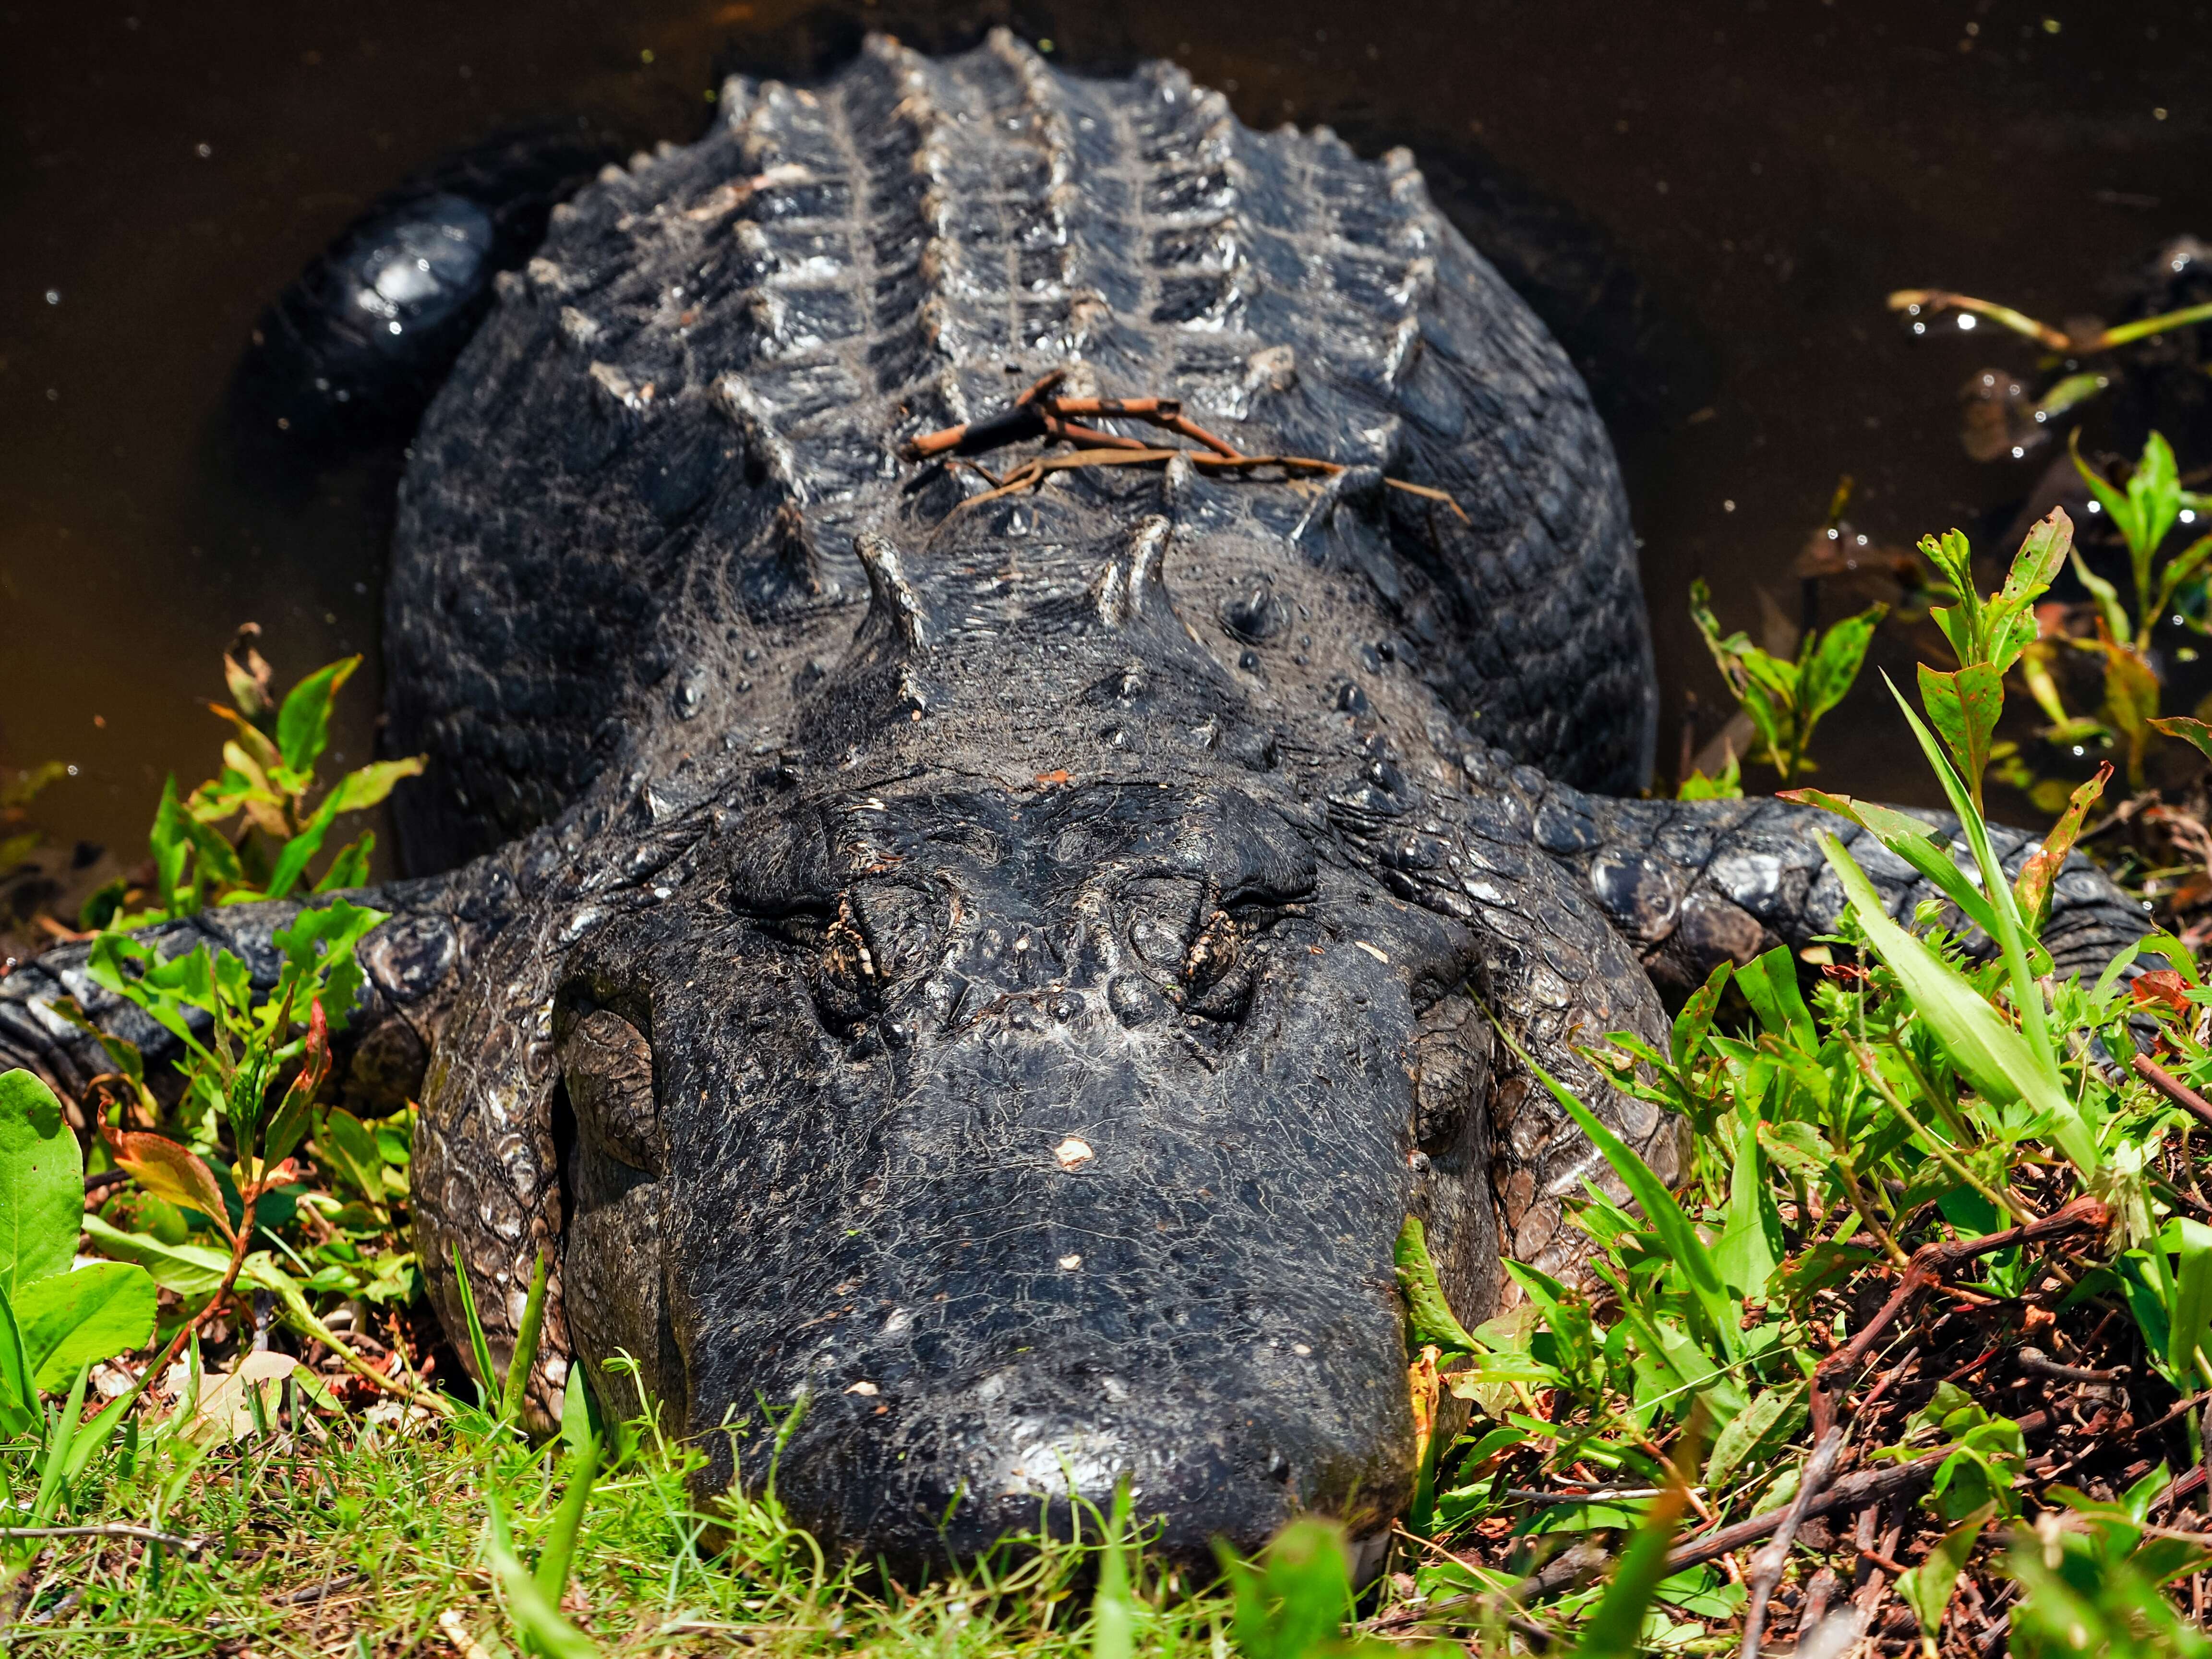 Image de Alligator